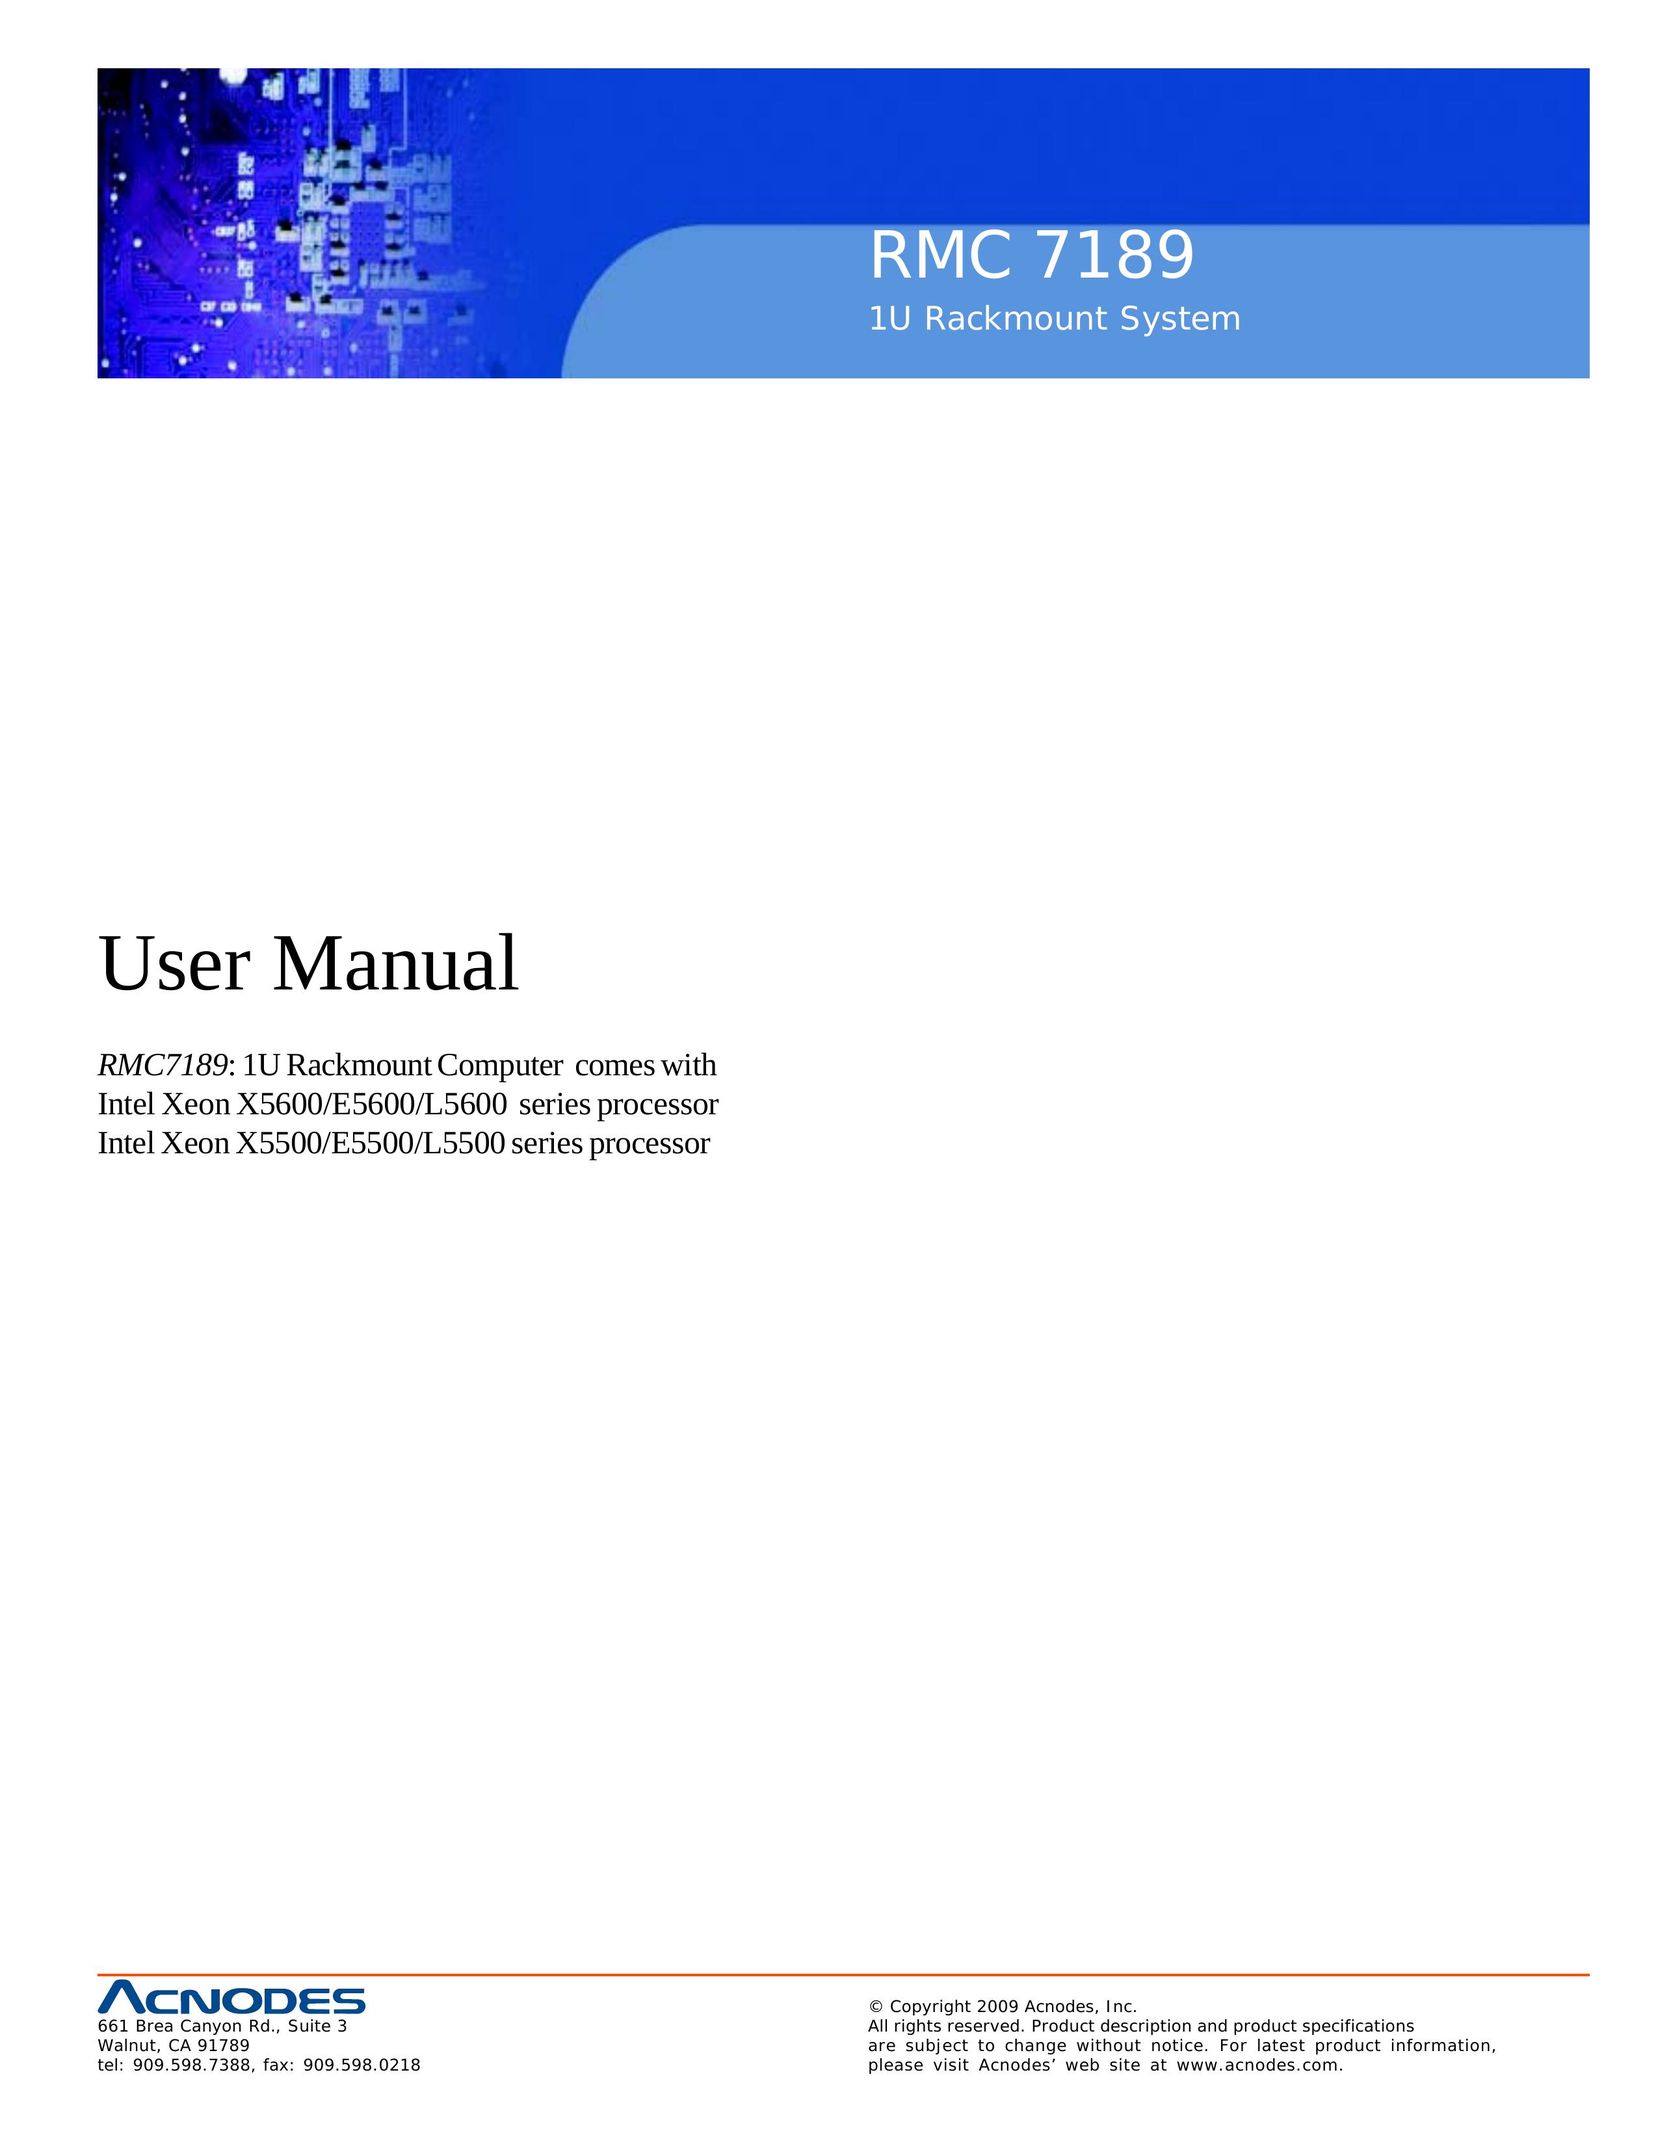 Acnodes RMC 7189 Computer Hardware User Manual